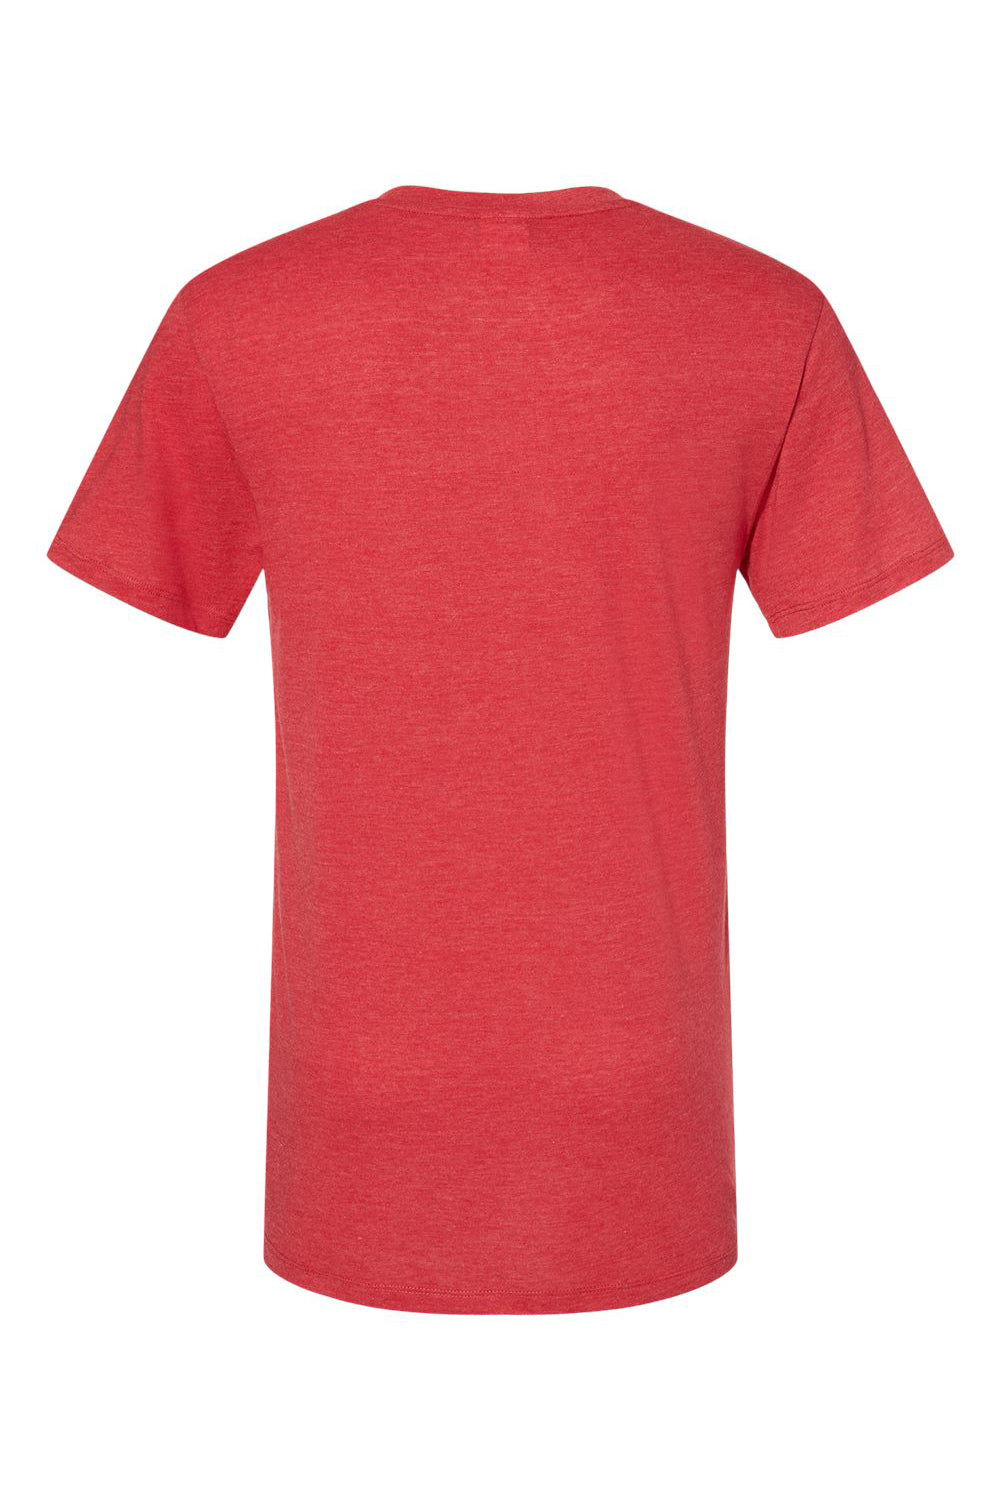 Augusta Sportswear 3065 Mens Short Sleeve Crewneck T-Shirt Heather Red Flat Back